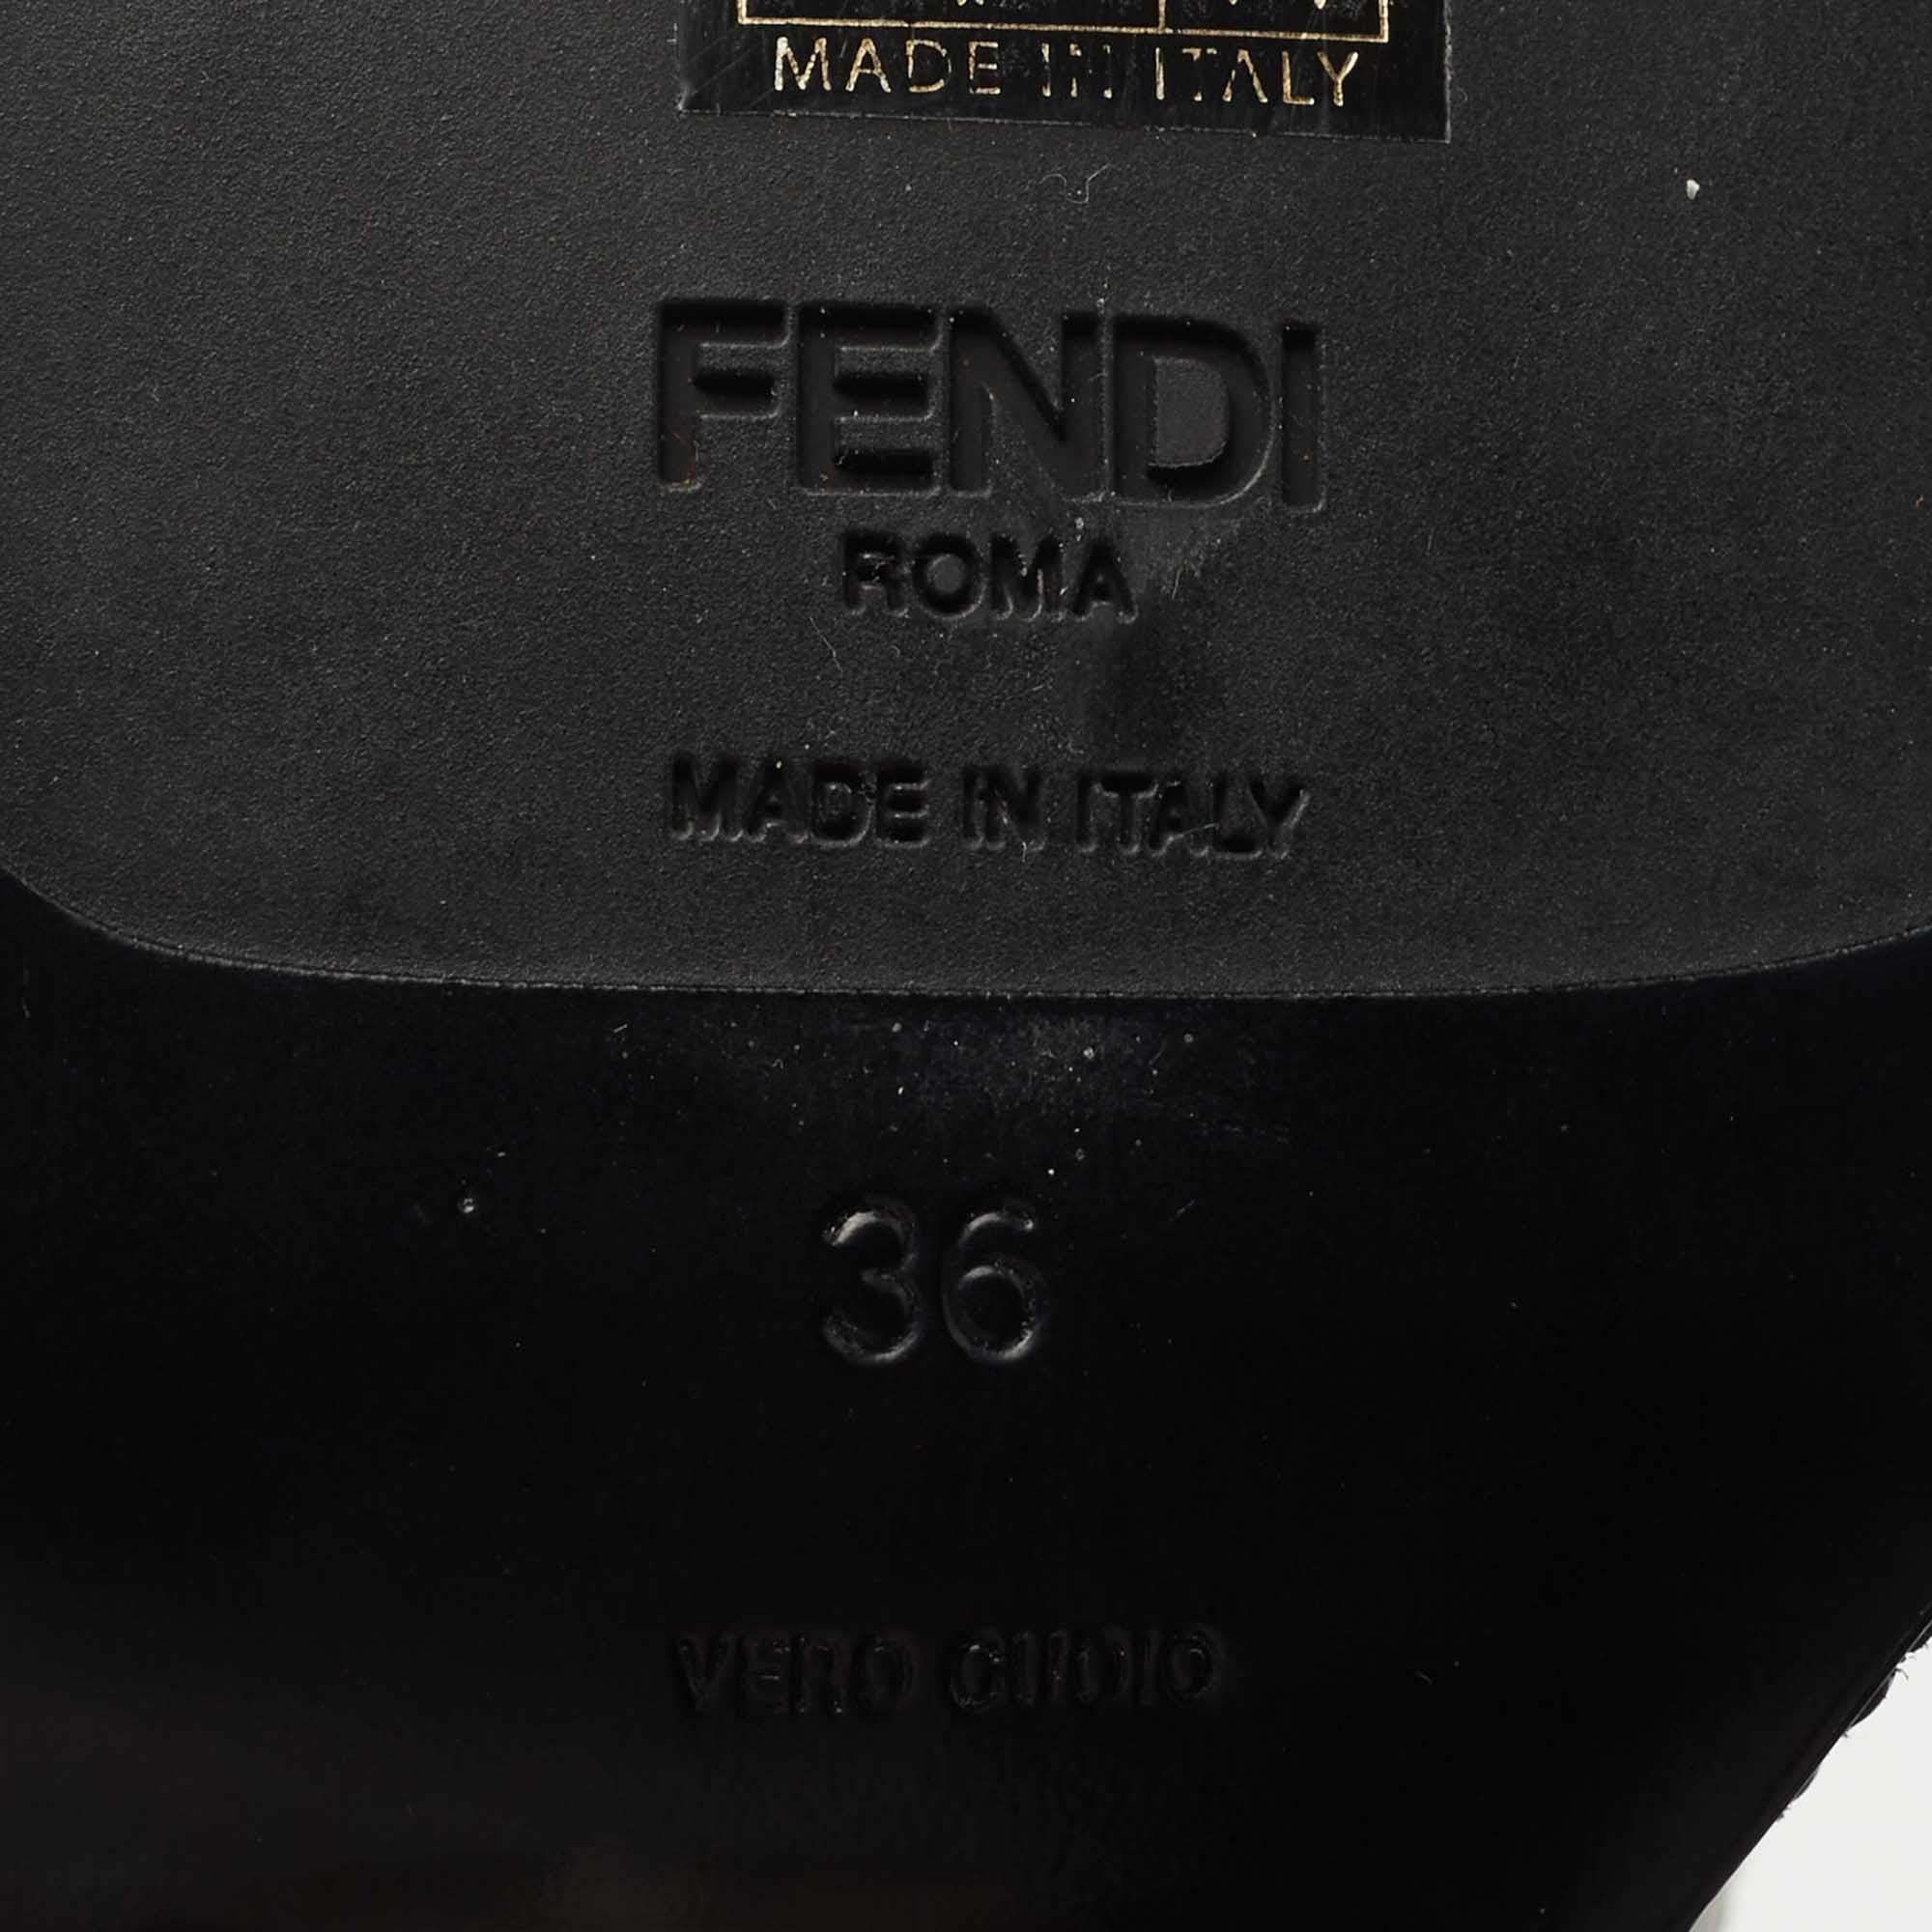 Fendi Black Leather Ice Heel Ankle Boots Size 36 4